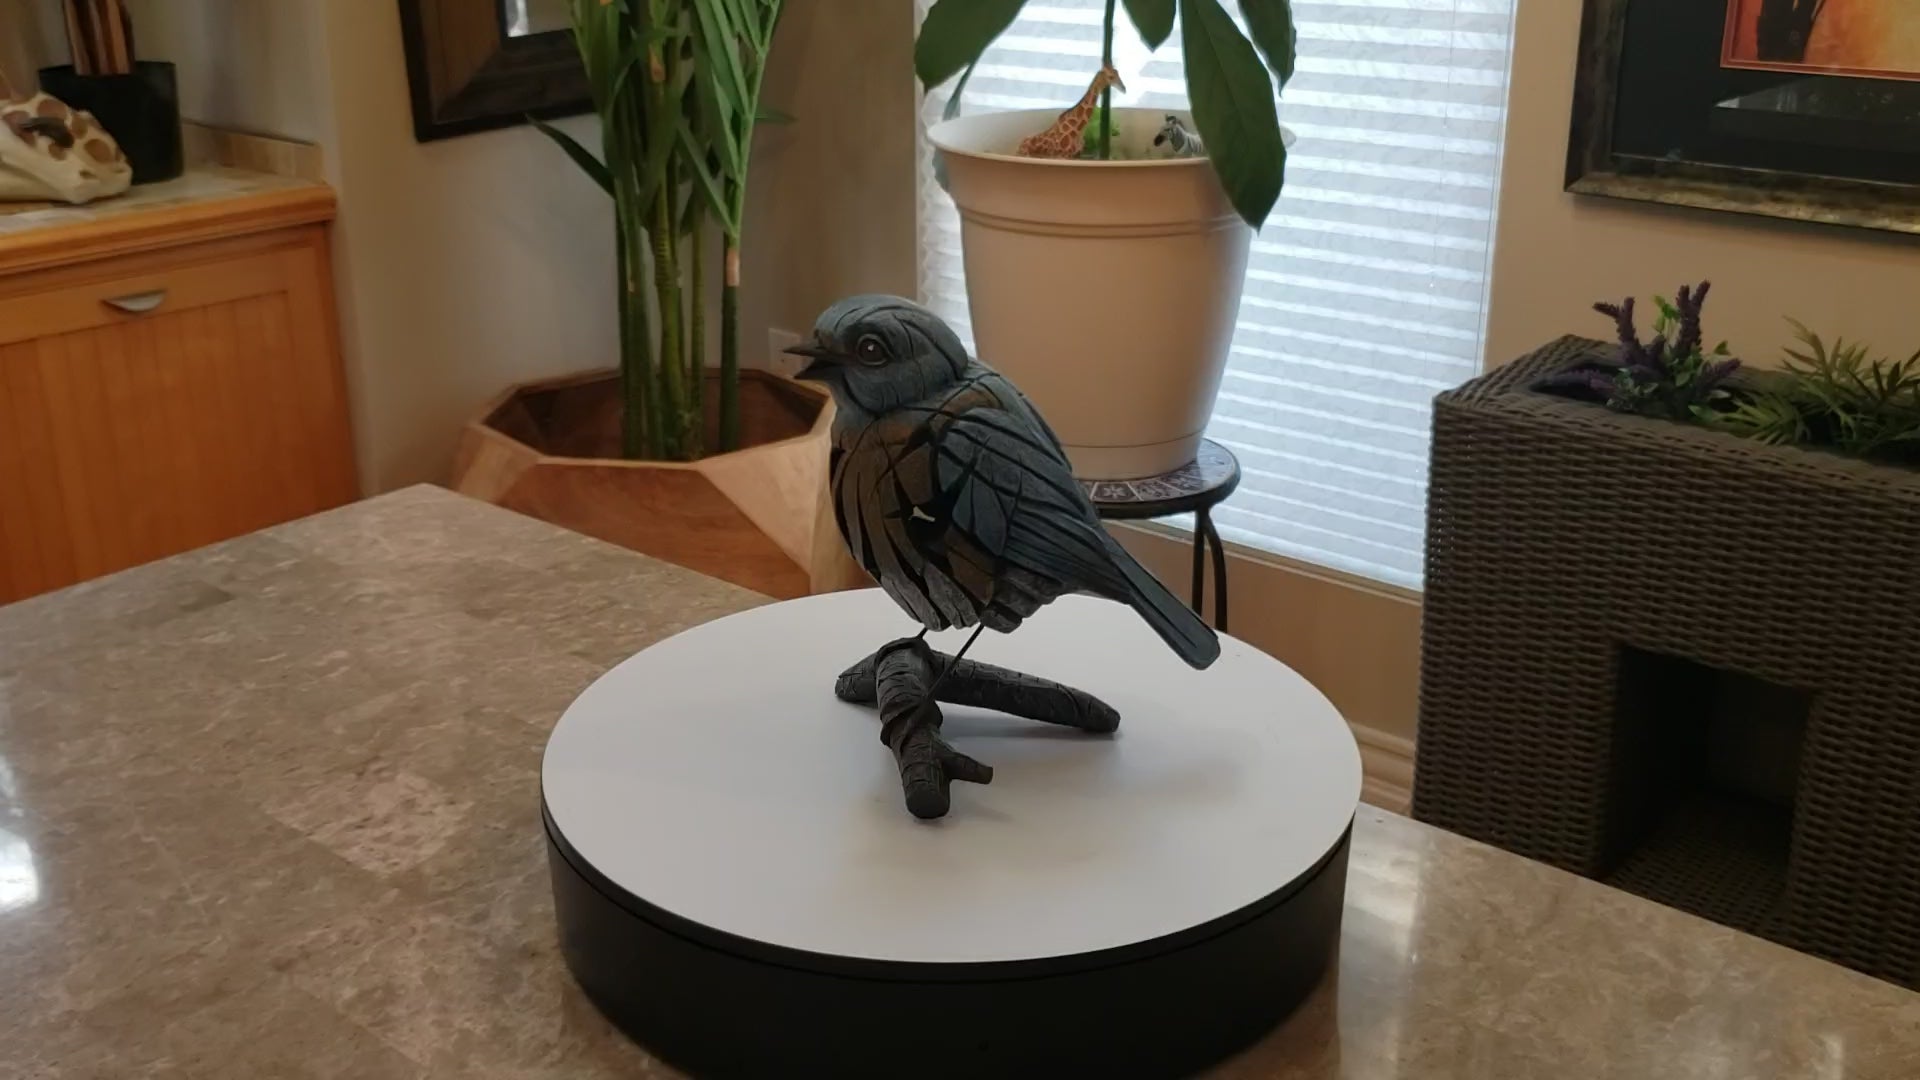 Auction for sale luxury bluebird statue